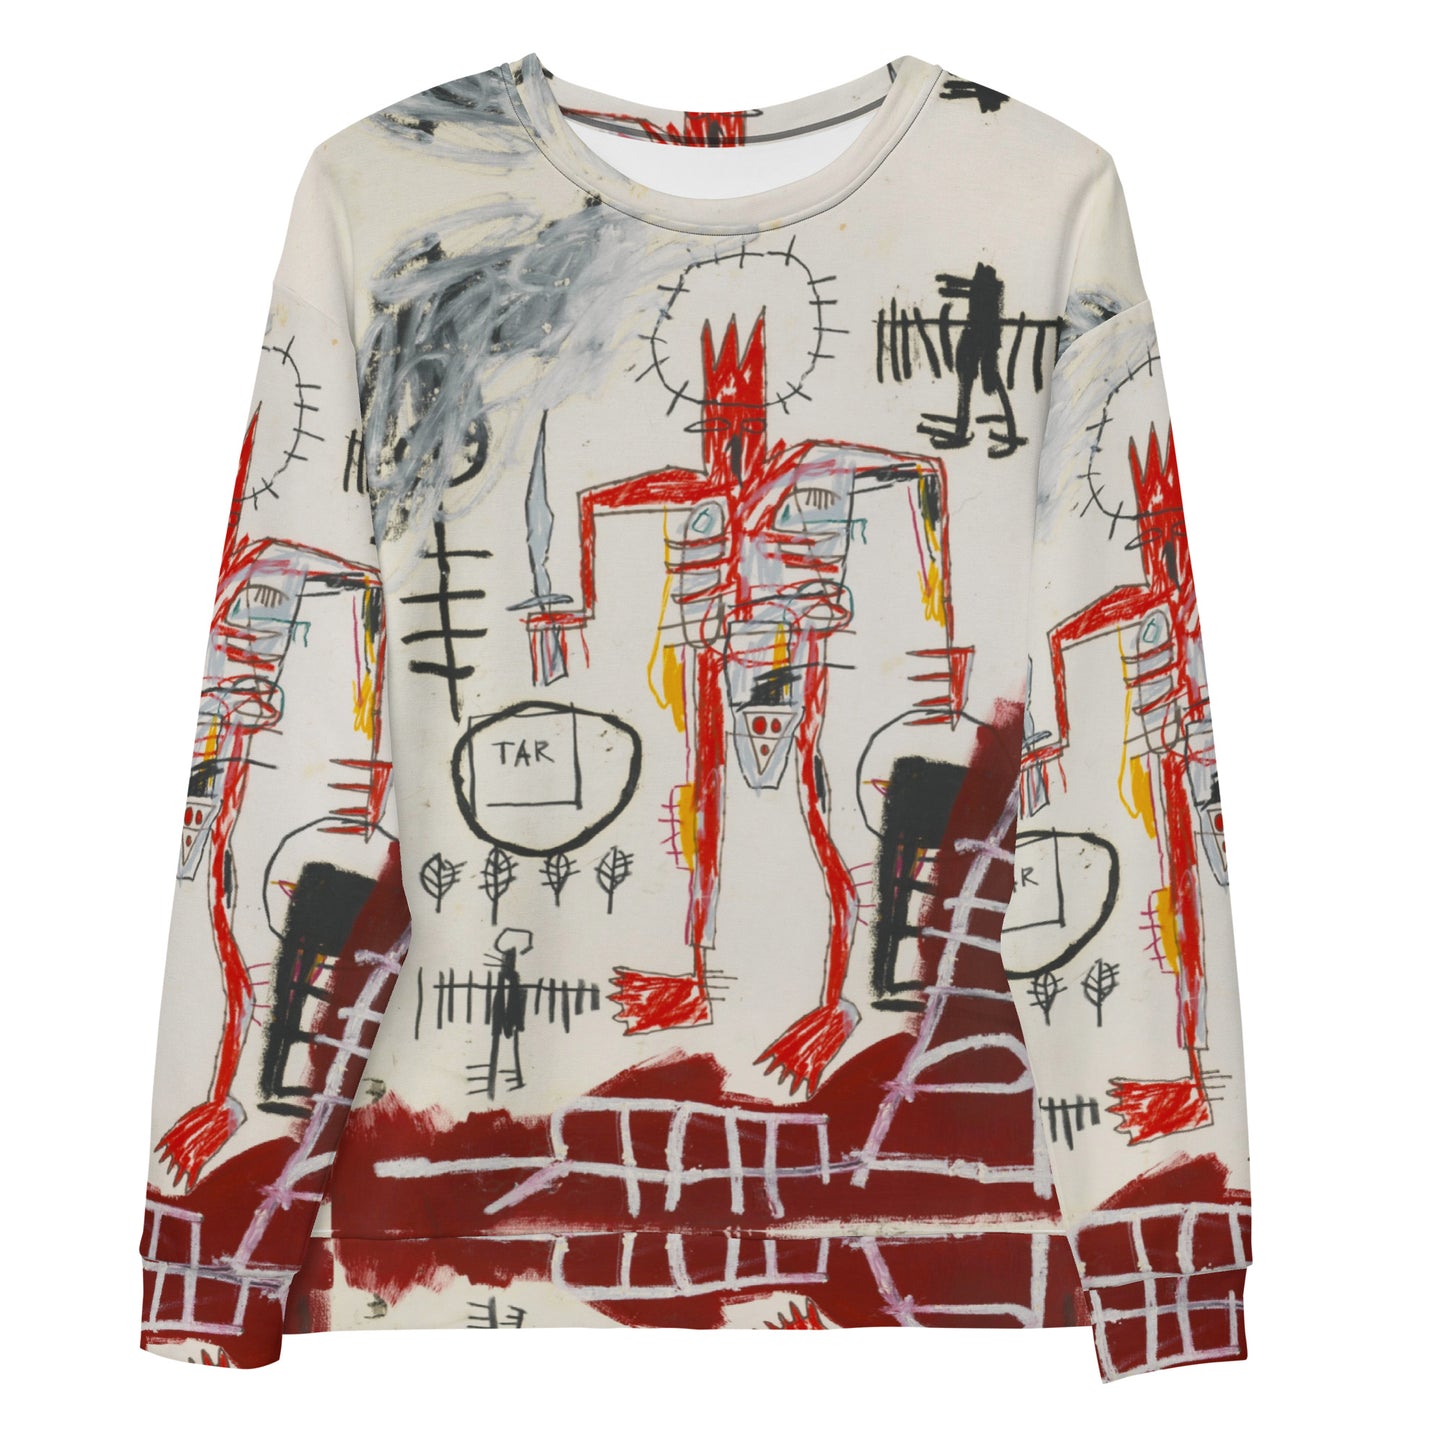 Jean-Michel Basquiat "Untitled" Artwork Printed Premium Streetwear Crewneck Sweatshirt